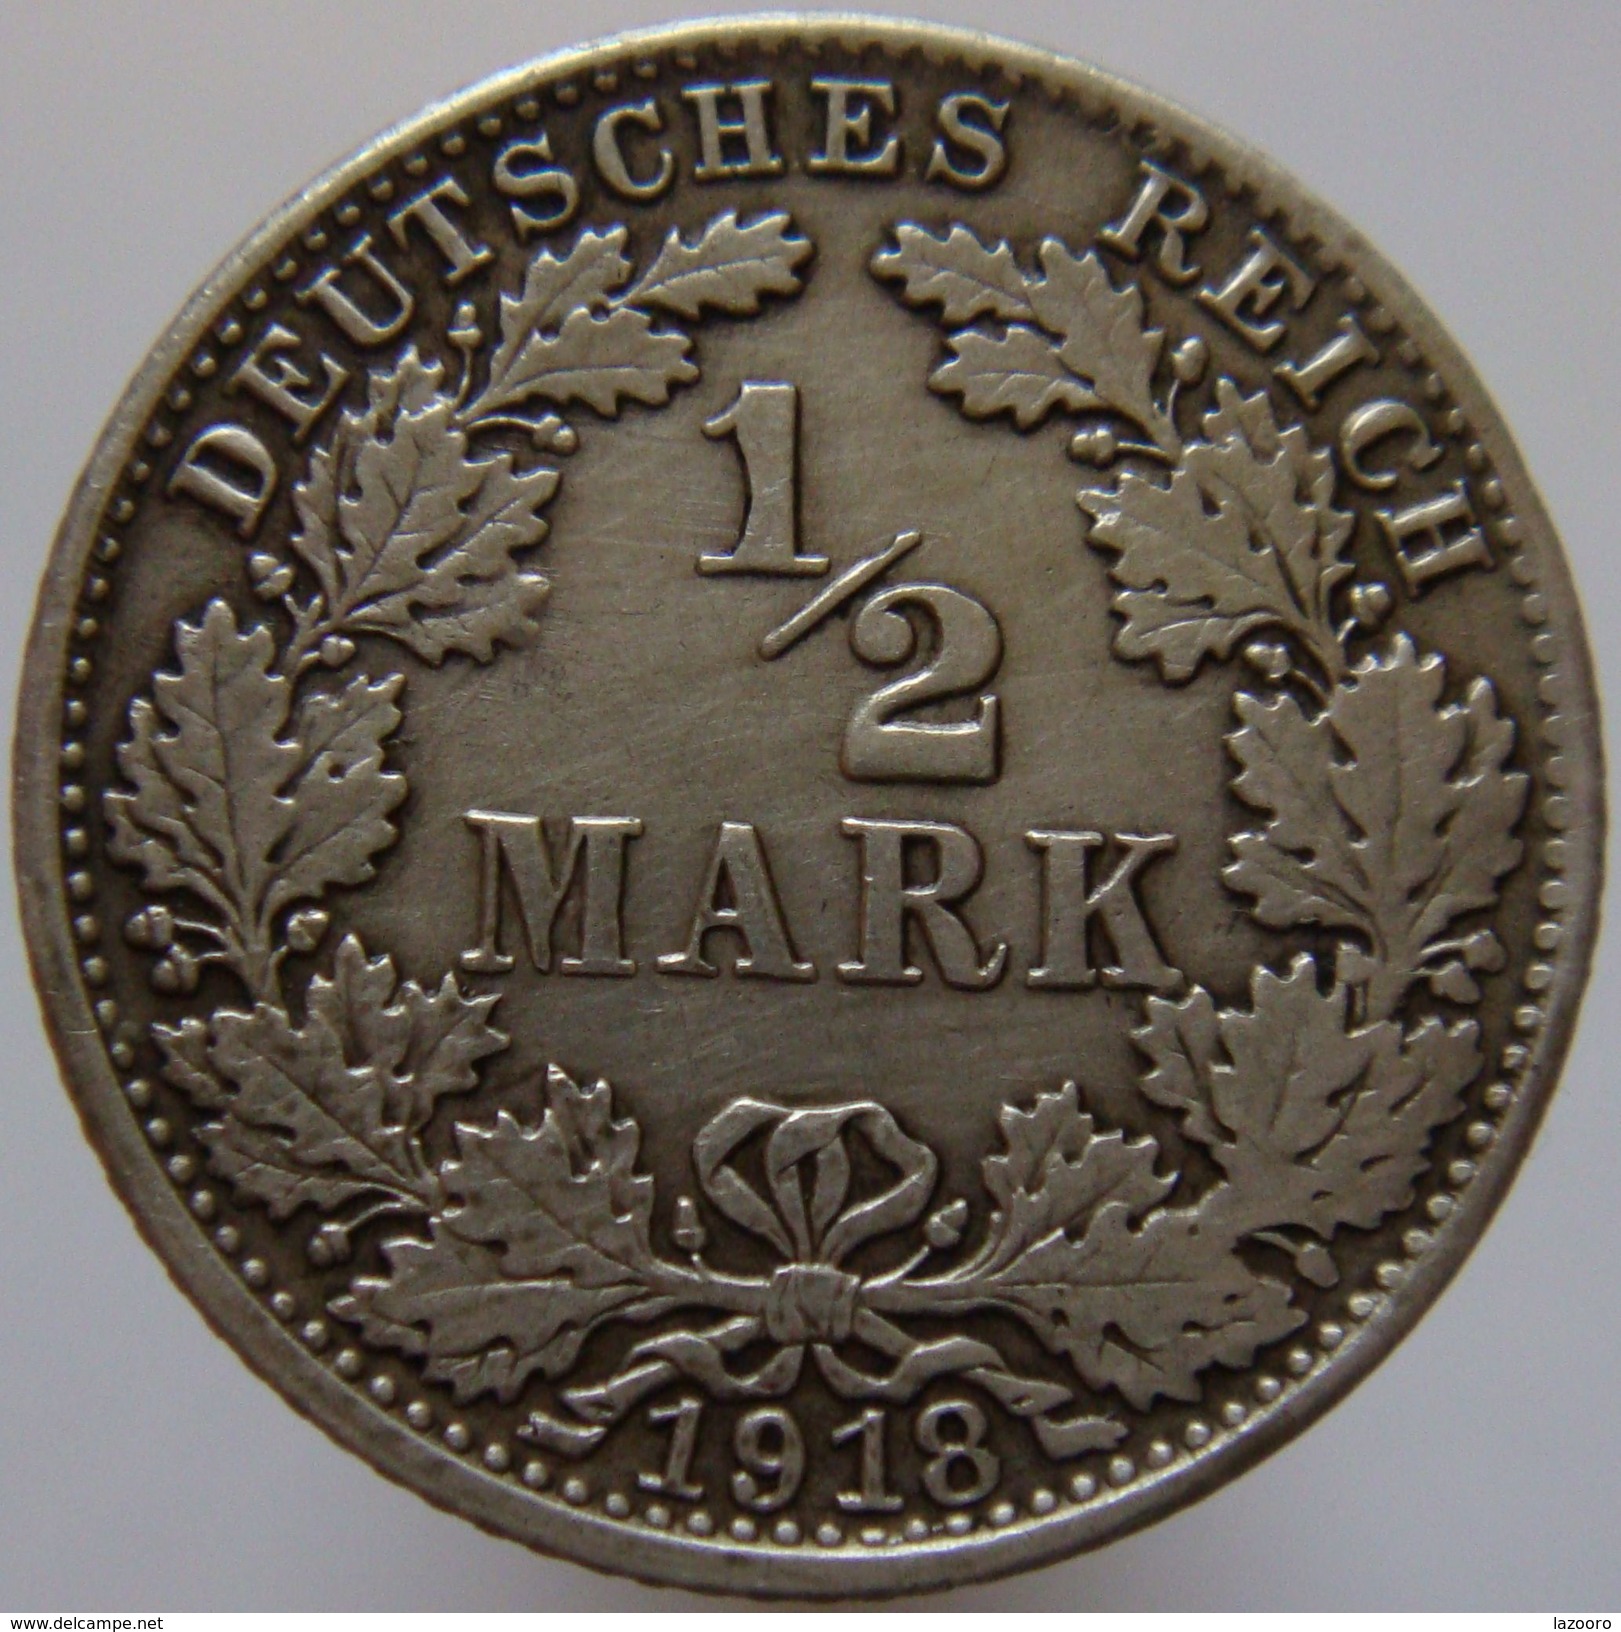 Germany 1/2 Mark 1918 G, Double G XF - Silver - 1/2 Mark